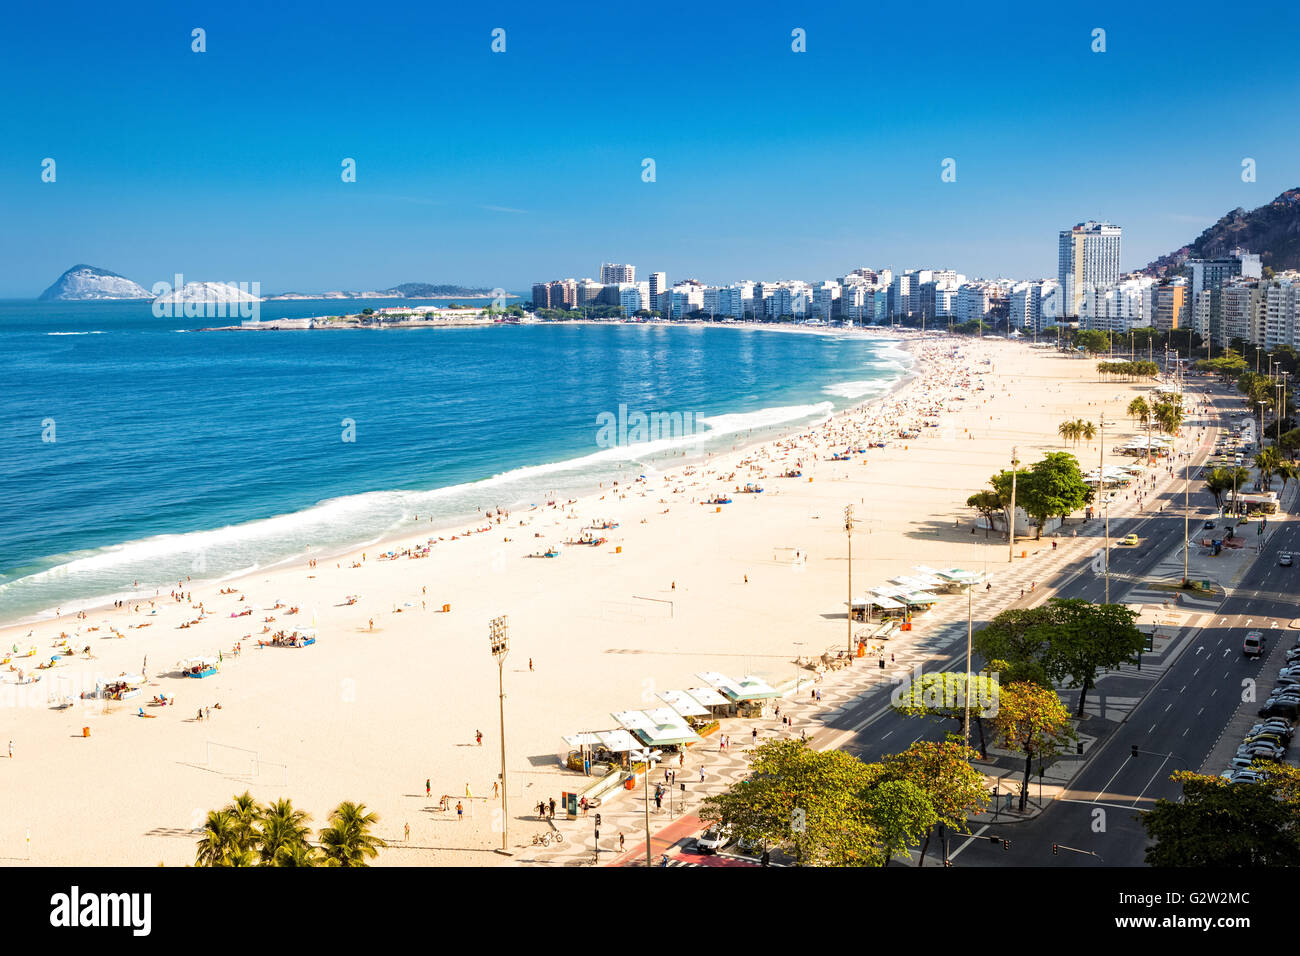 Aerial view of Copacabana beach in Rio de Janeiro Stock Photo